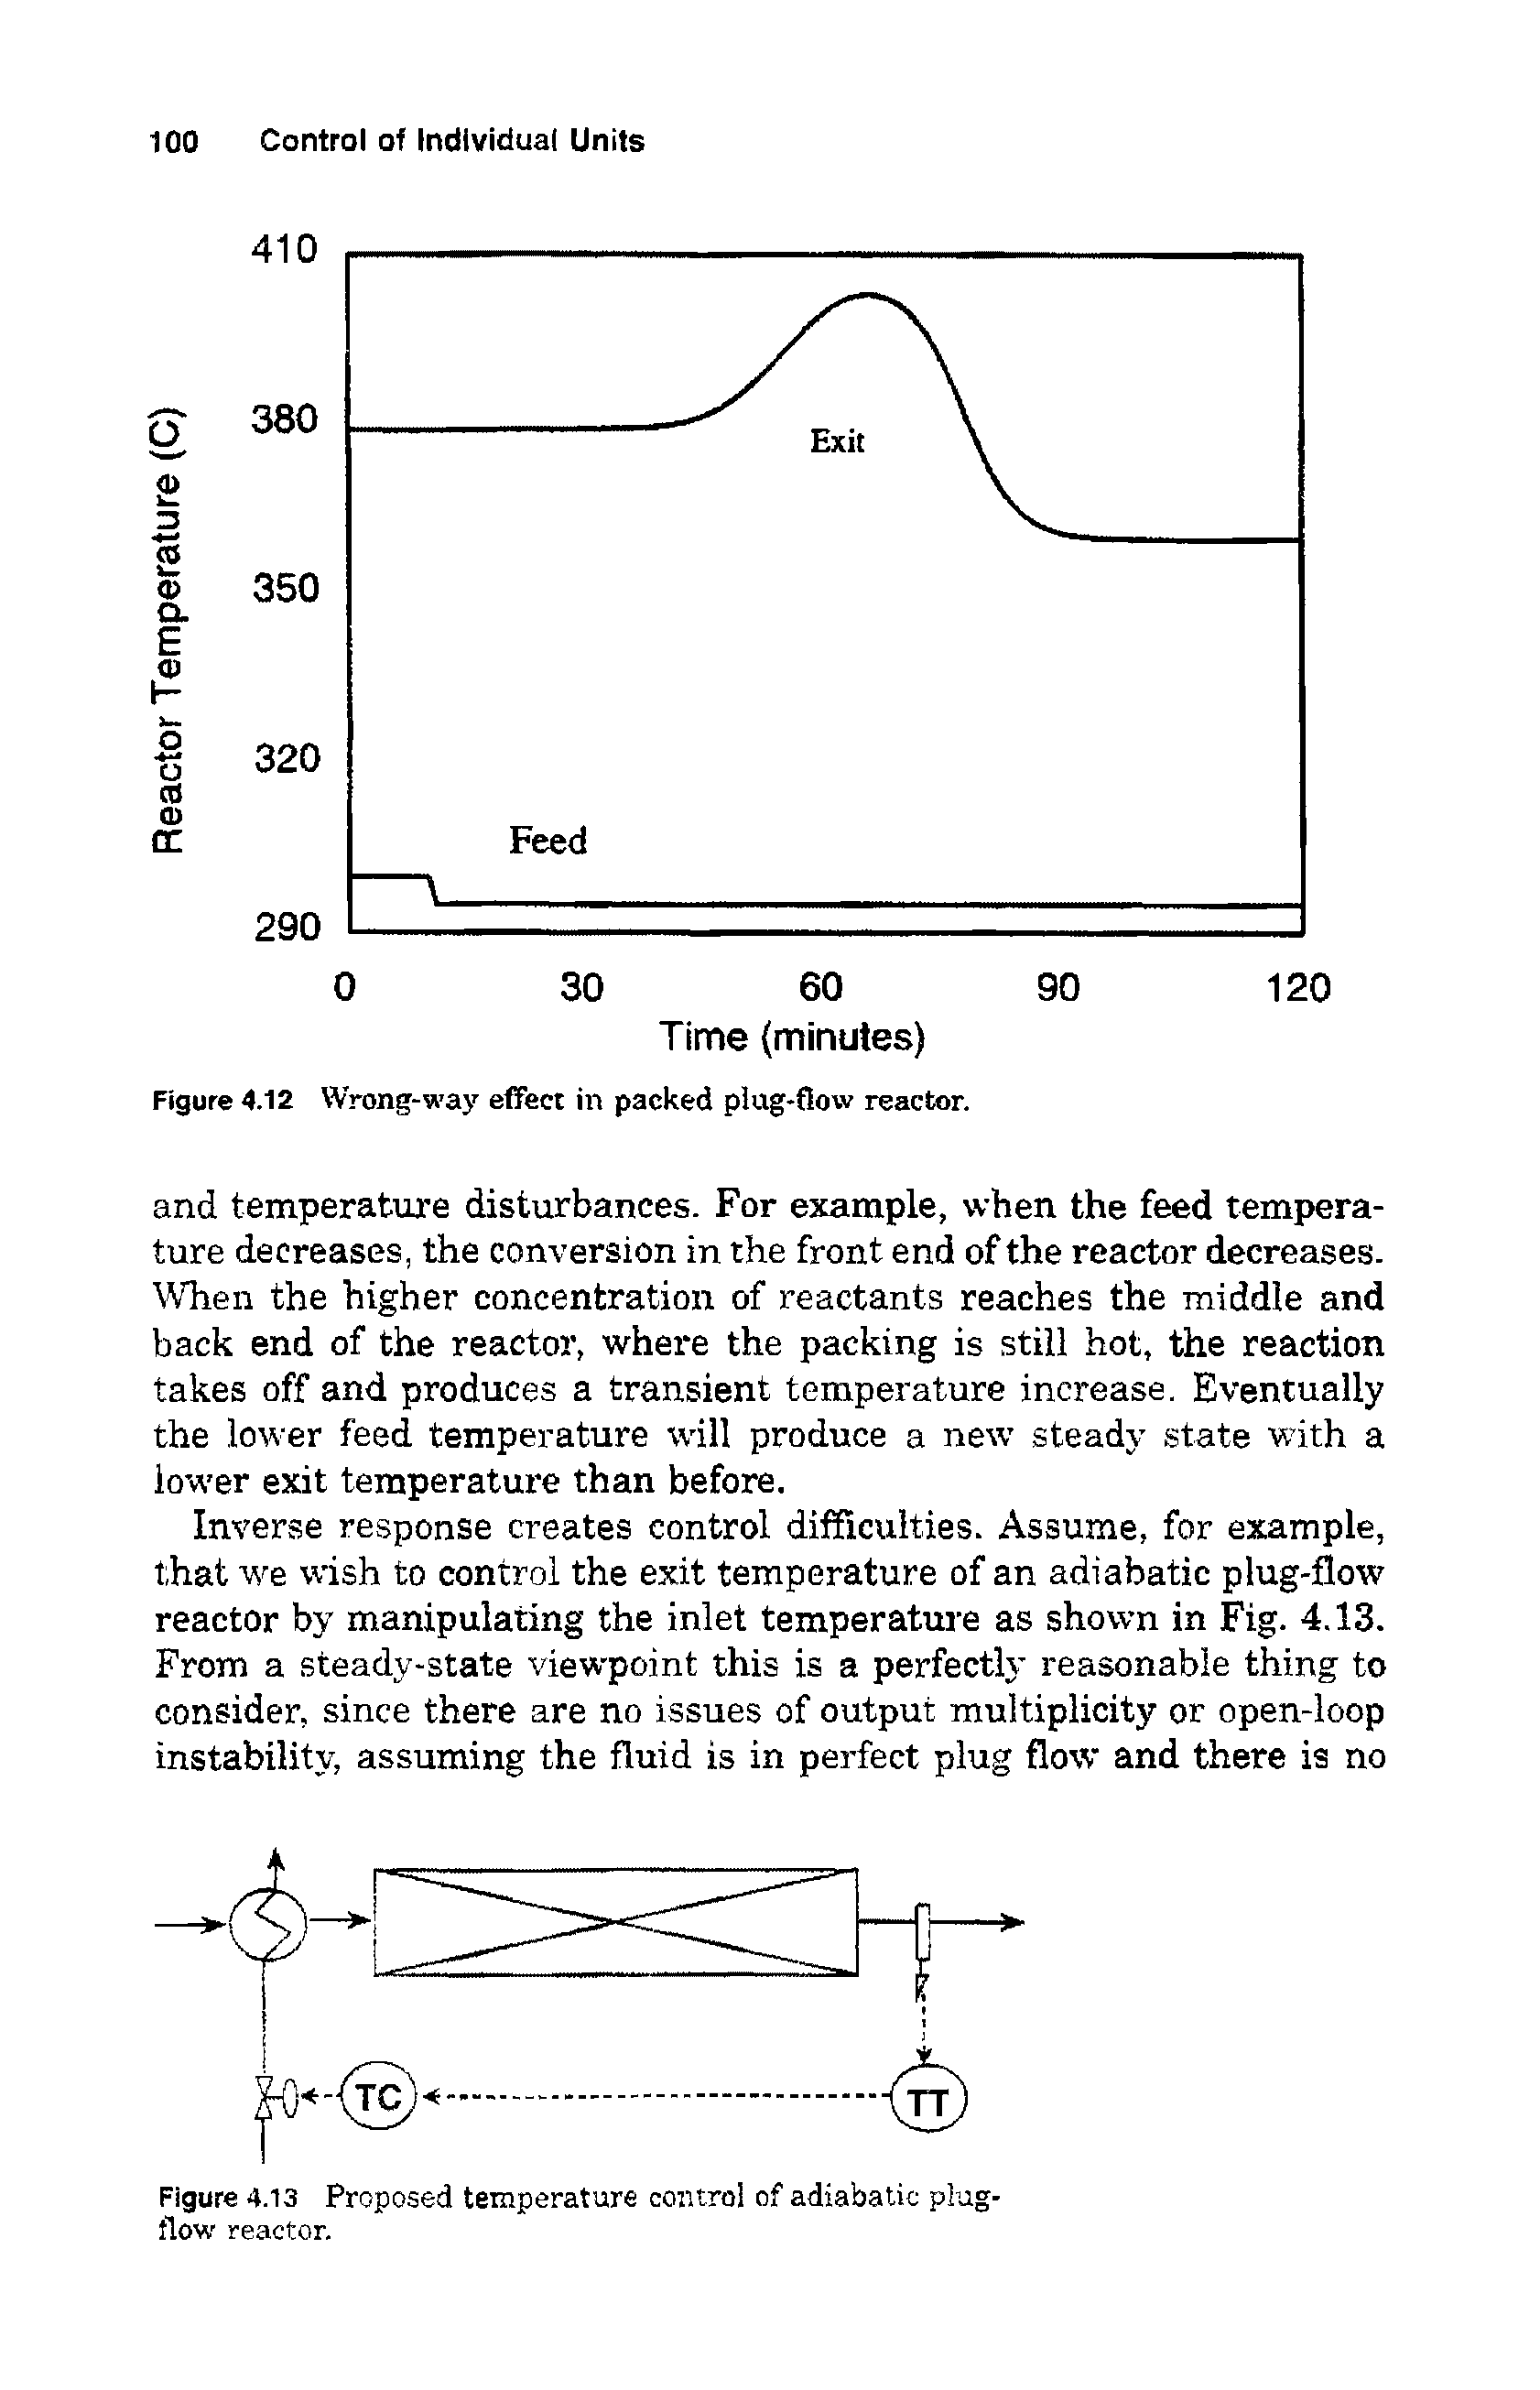 Figure 4.13 Proposed temperature control of adiabatic plug-flow reactor.